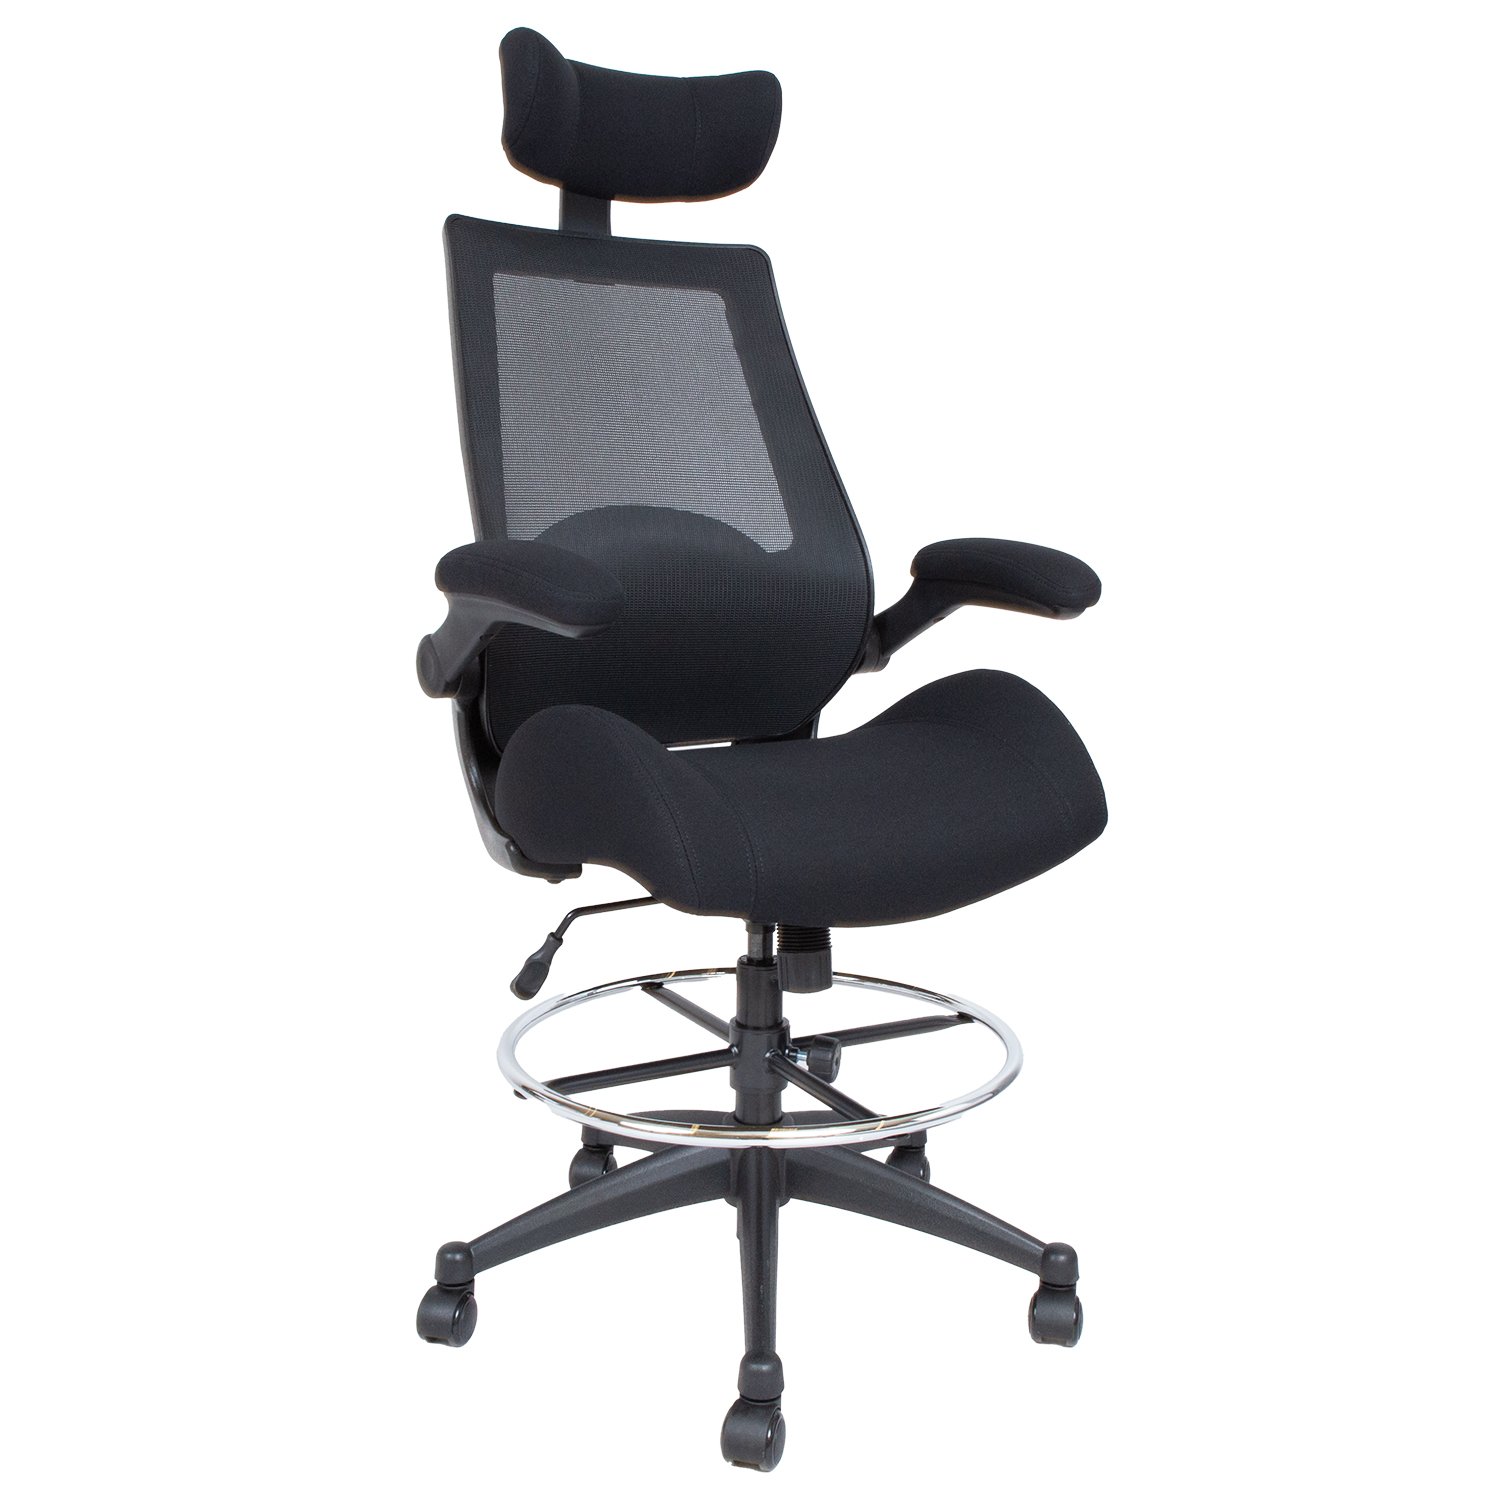 Biuro kėdė MILLER, 70x71x134-153.5 cm, juoda